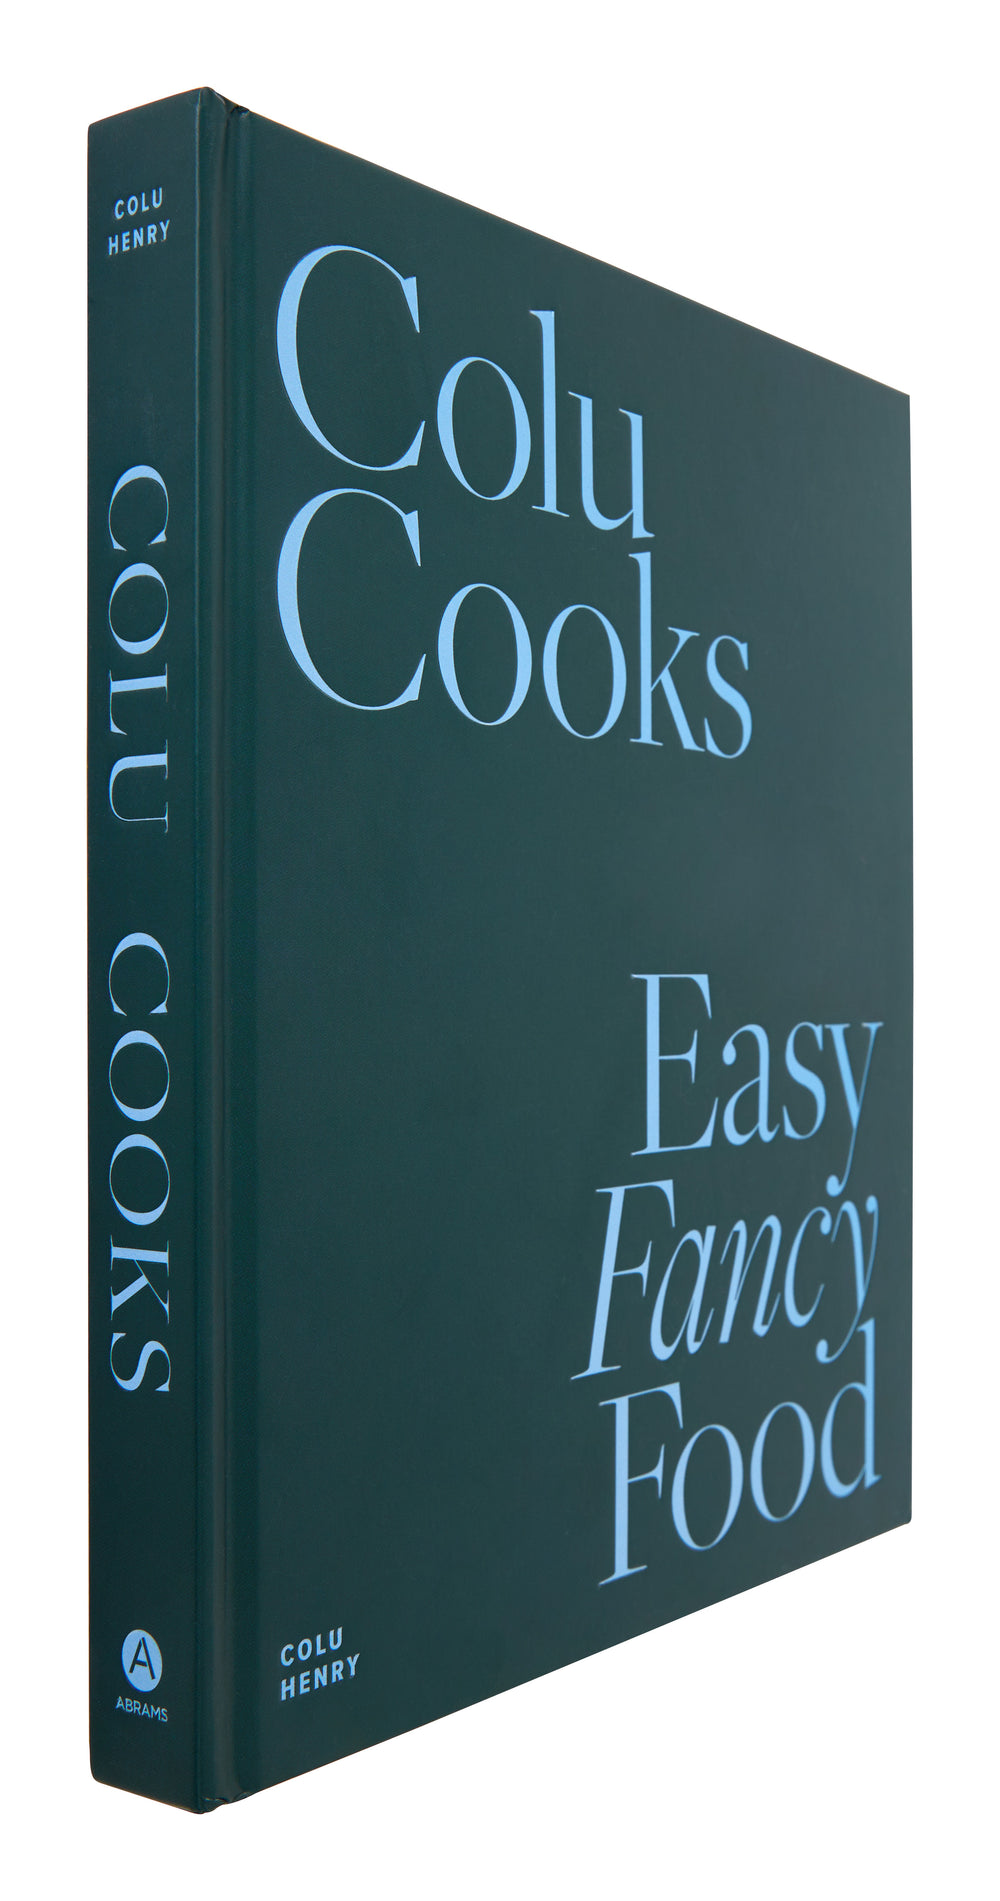 Colu Cooks: Easy Fancy Food